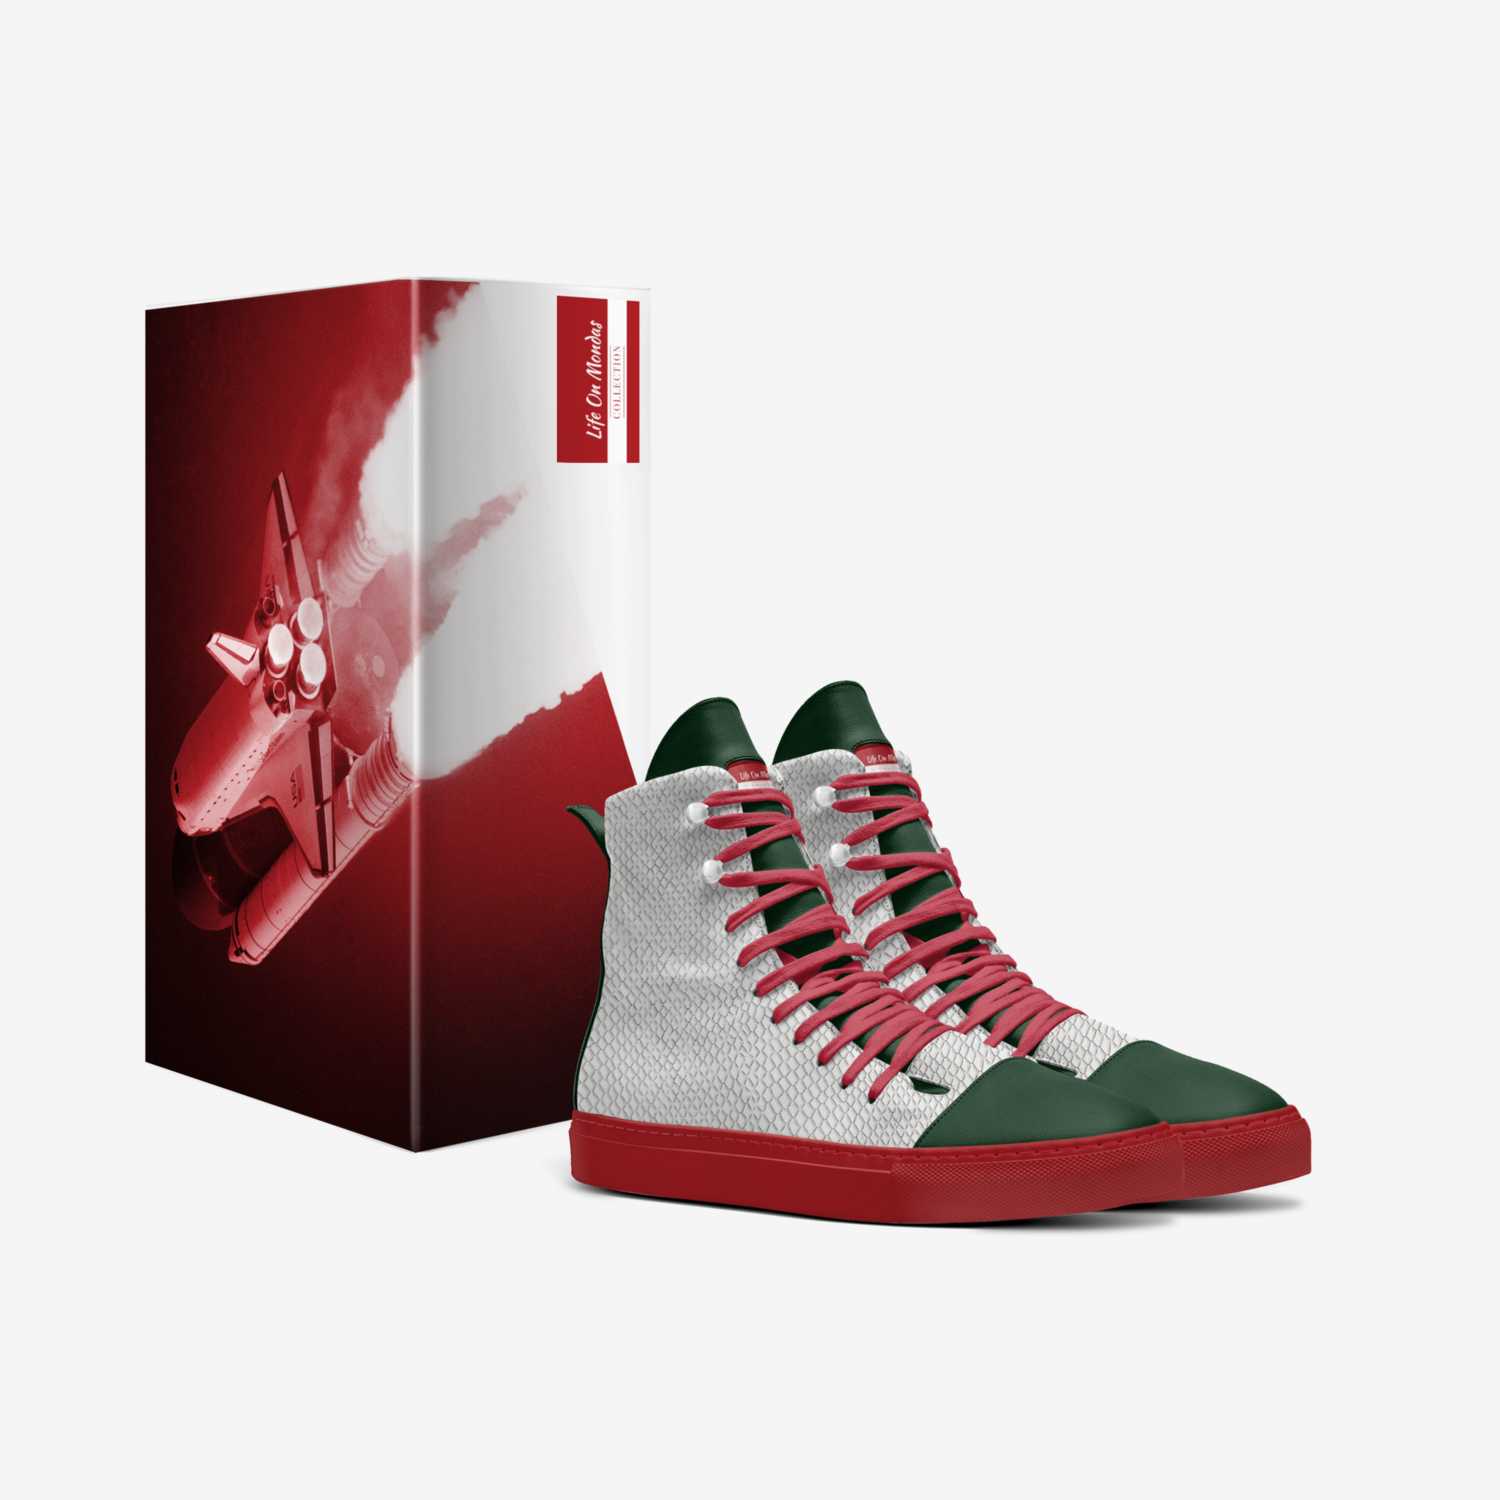 Mondas custom made in Italy shoes by Joseph Dunn | Box view